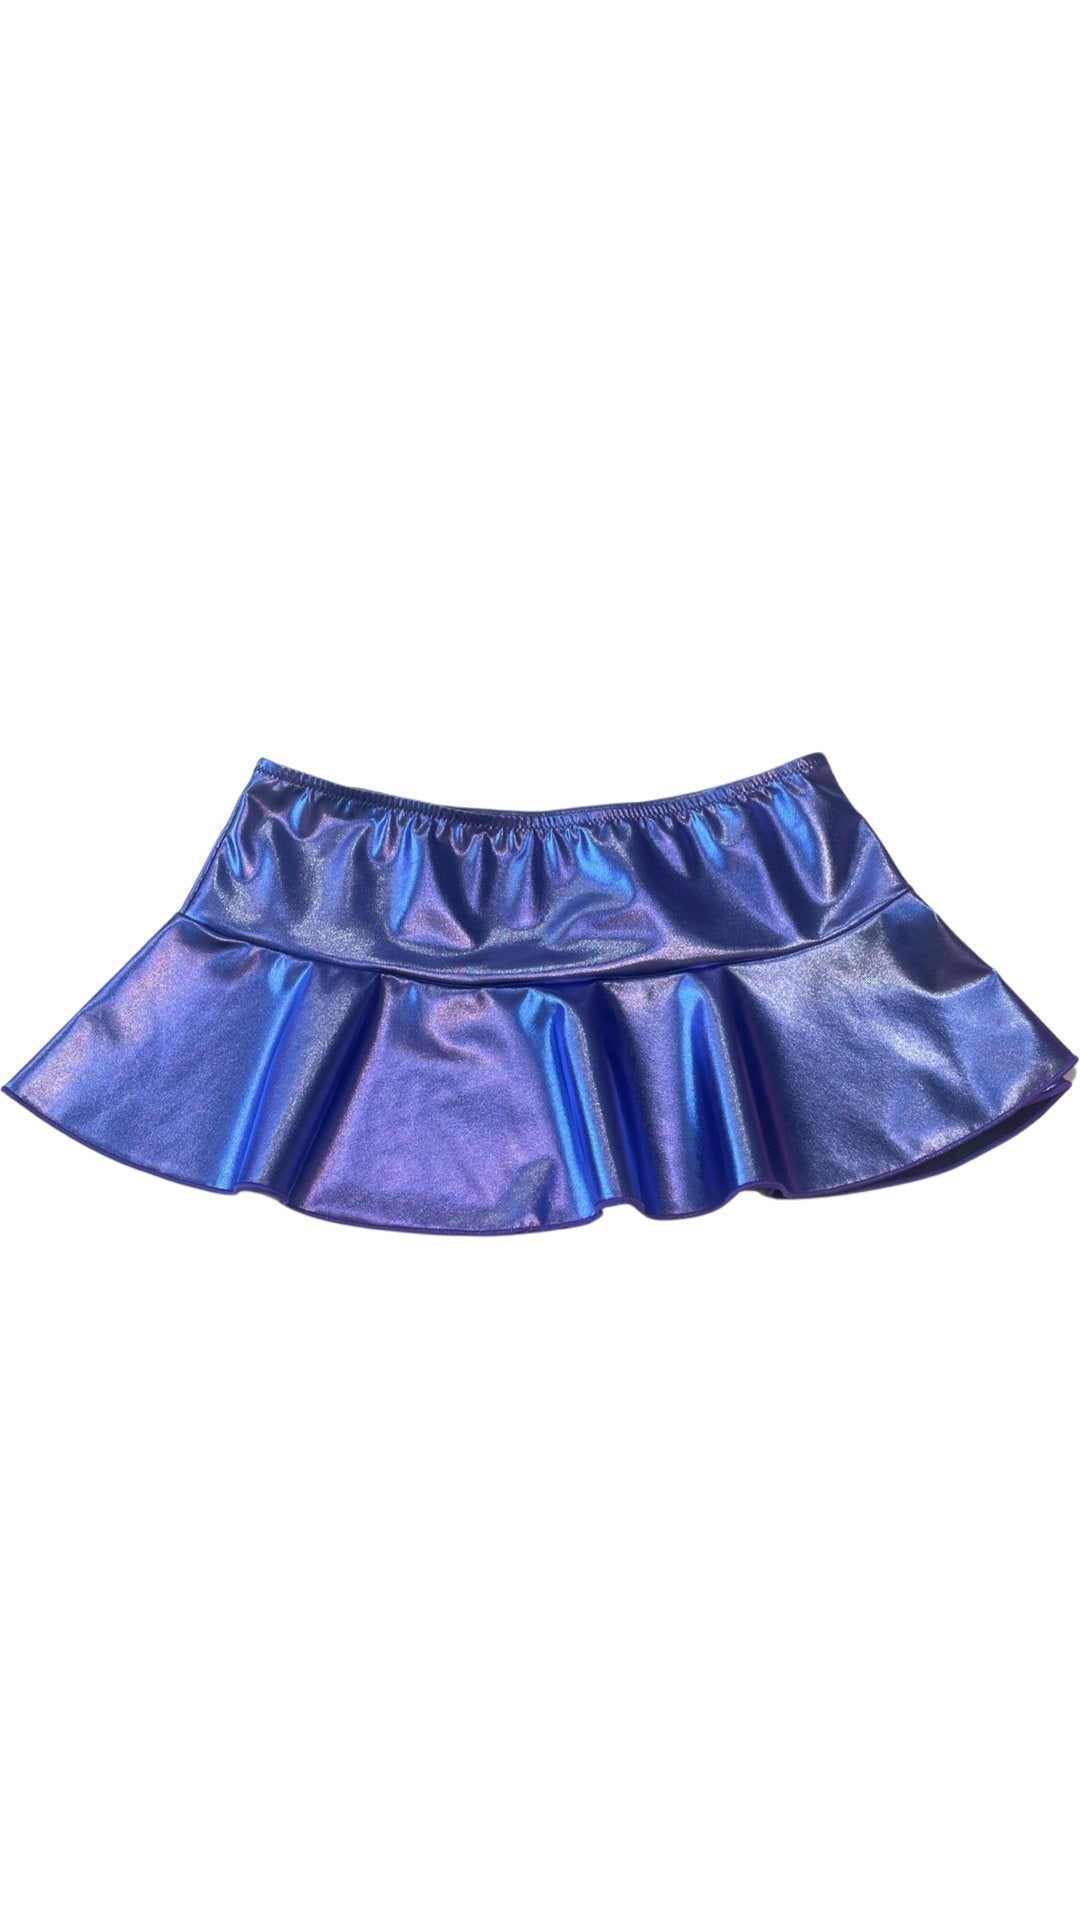 Metallic Mini Skirt - Lavender - Model Express VancouverClothing